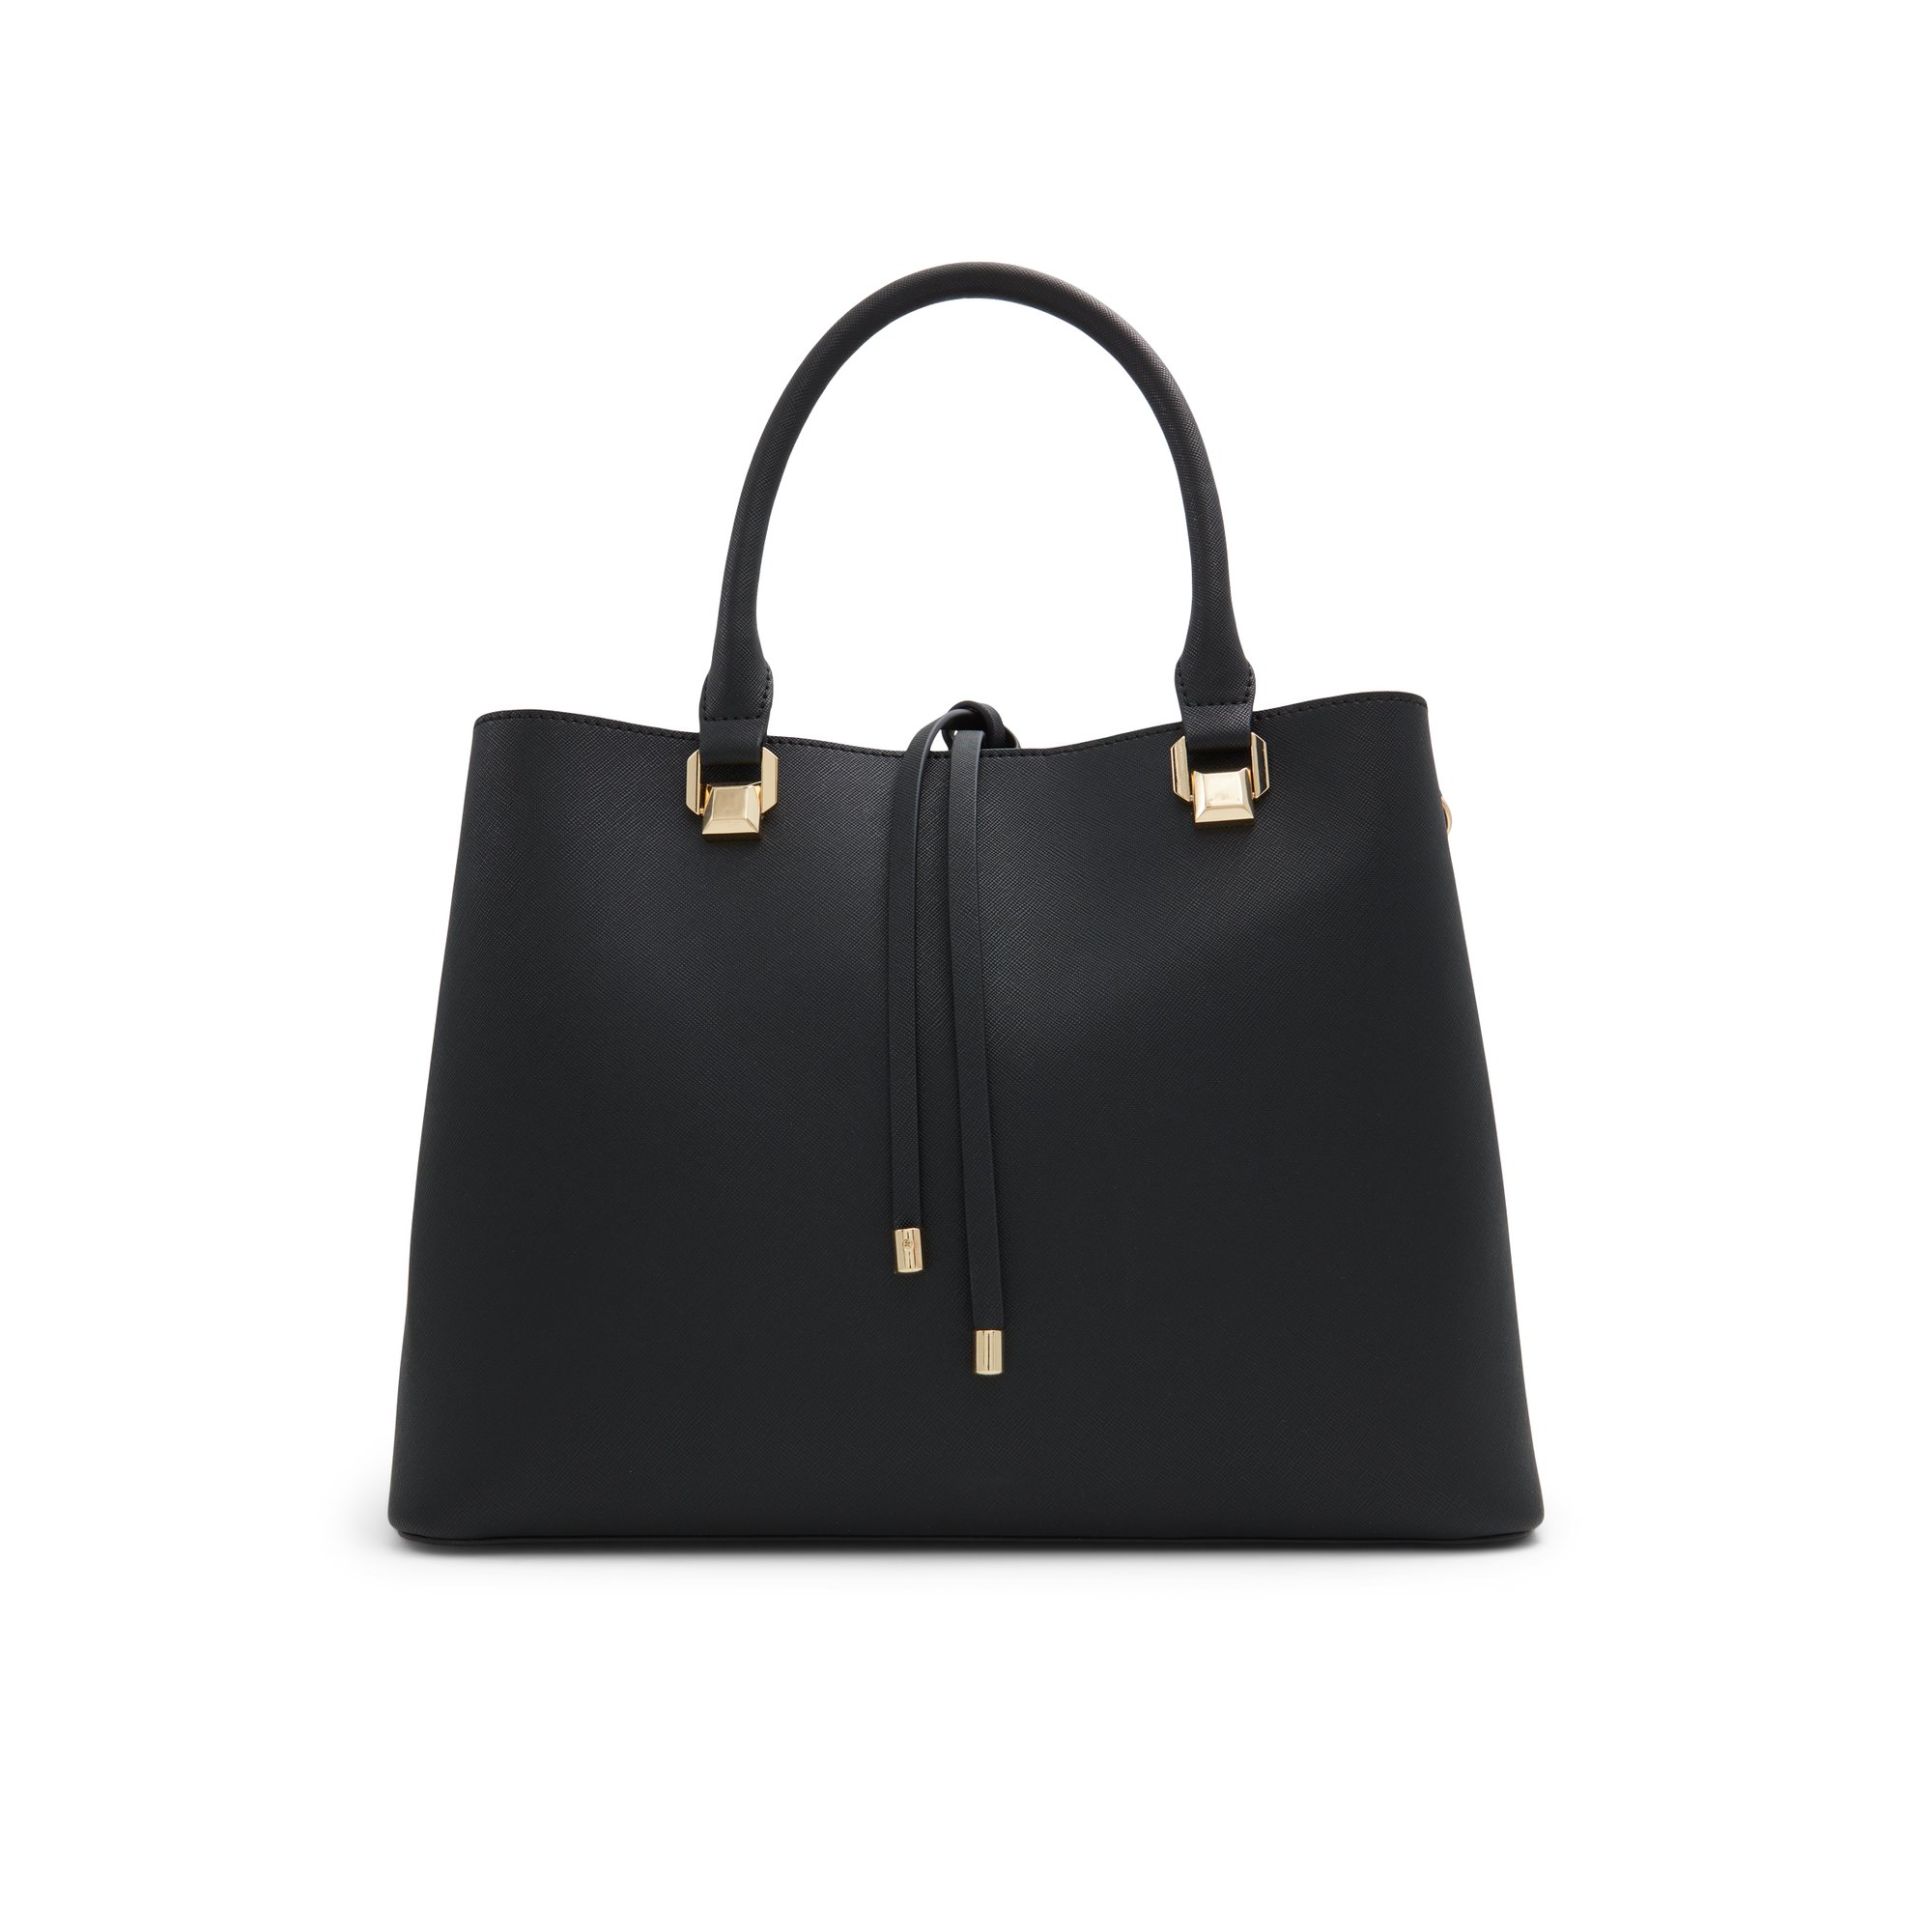 ALDO Aquafynaax - Women's Handbags Totes - Black